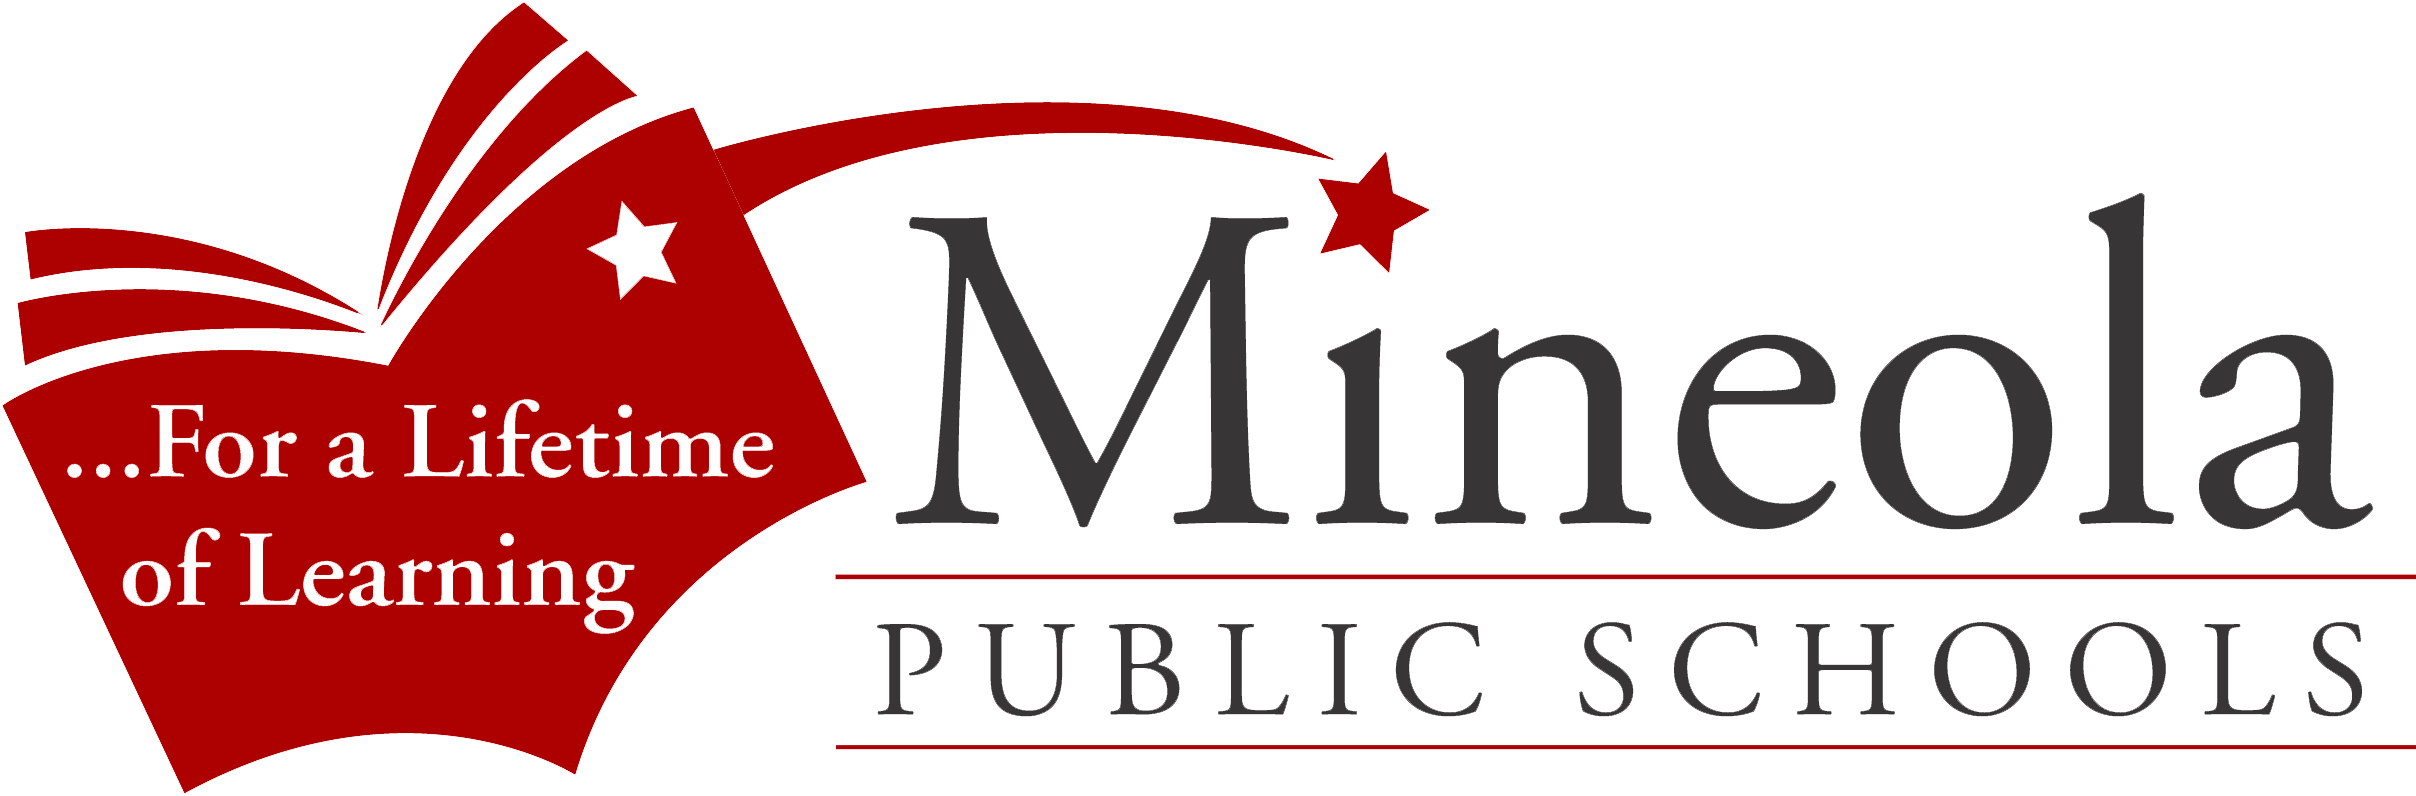 Mineola Public Schools